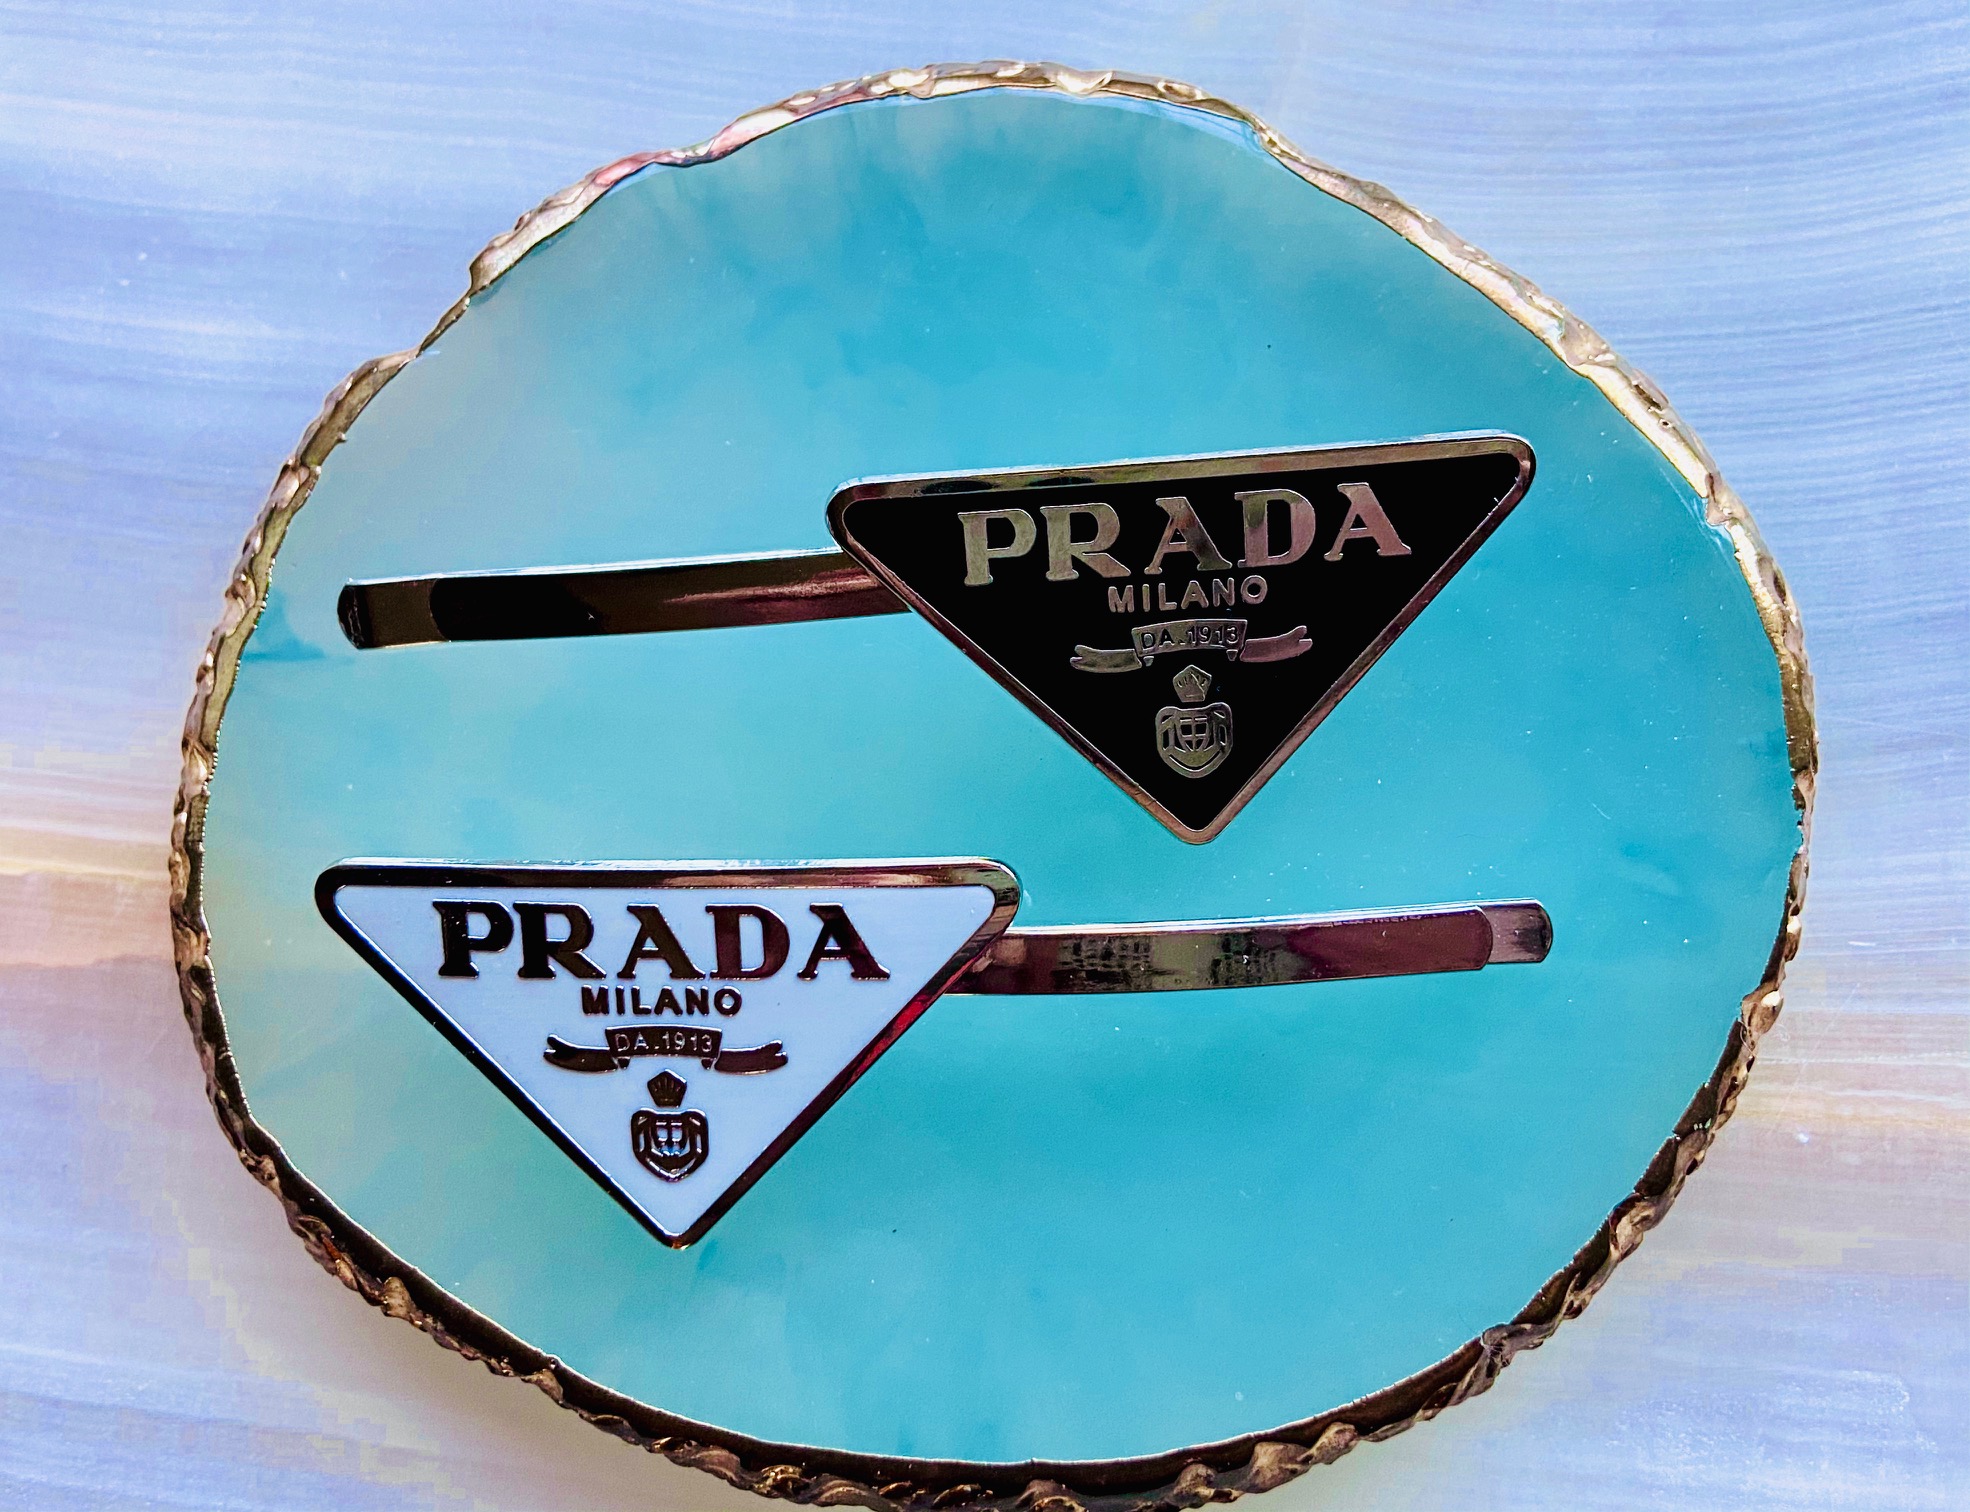 Prada triangle-logo hair clip, White